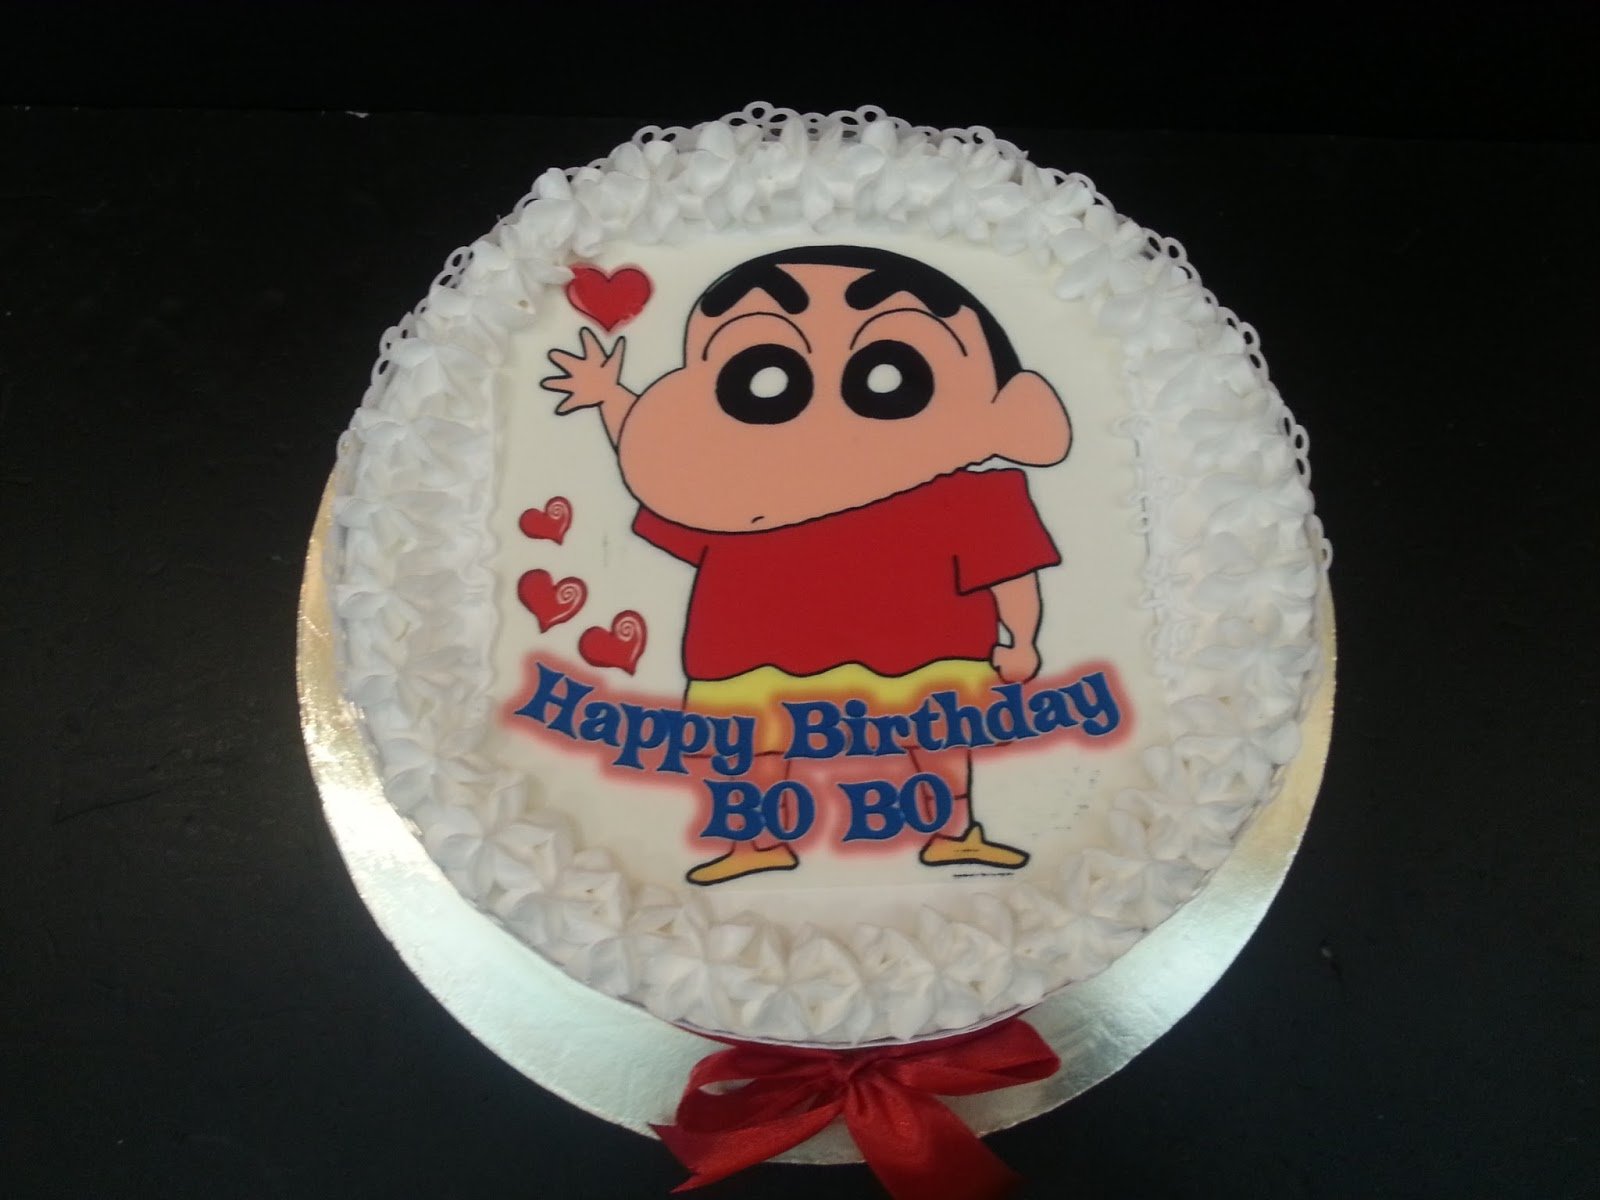 Shinchan Cakes Online | Buy Shinchan Theme Cake | Shinchan Birthday Cake